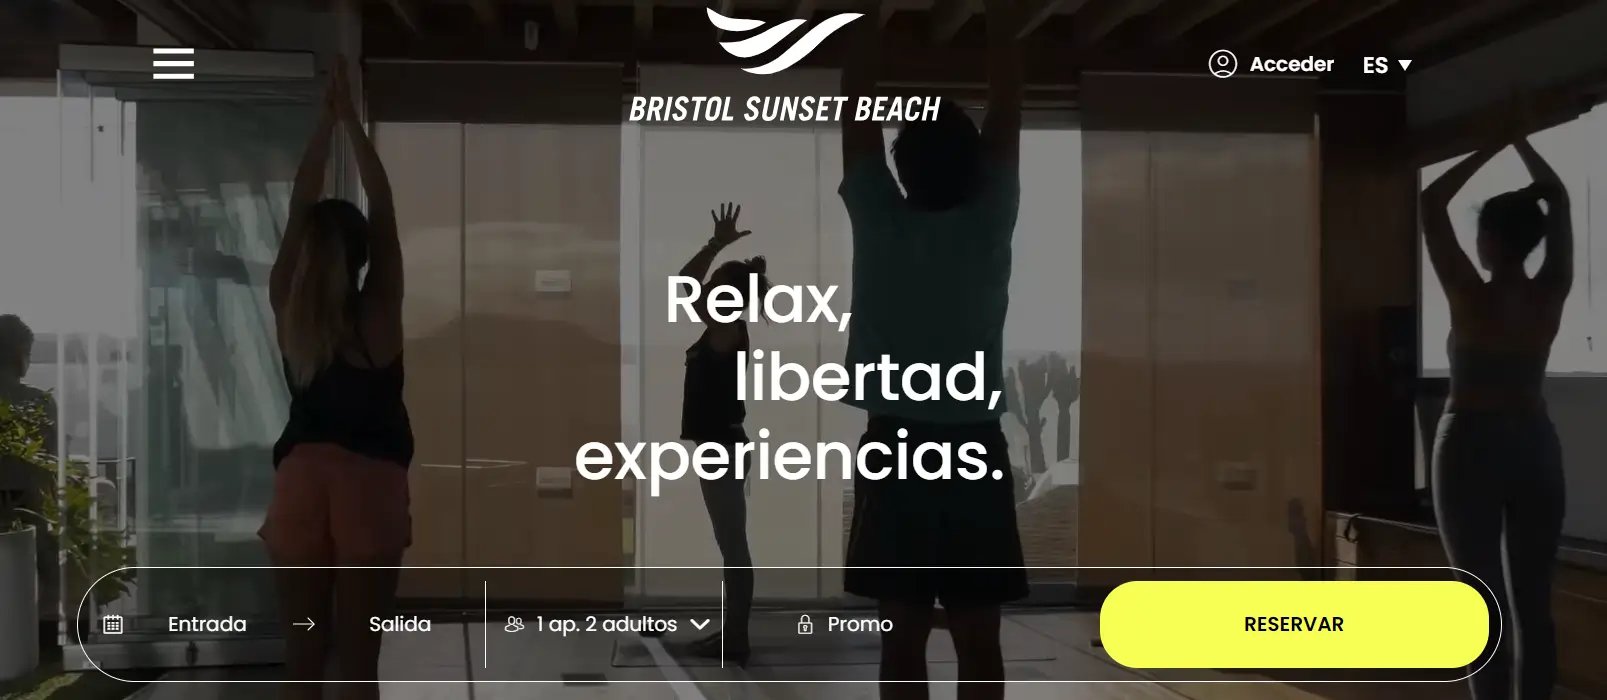 bristol-sunset-beach-web-hotel